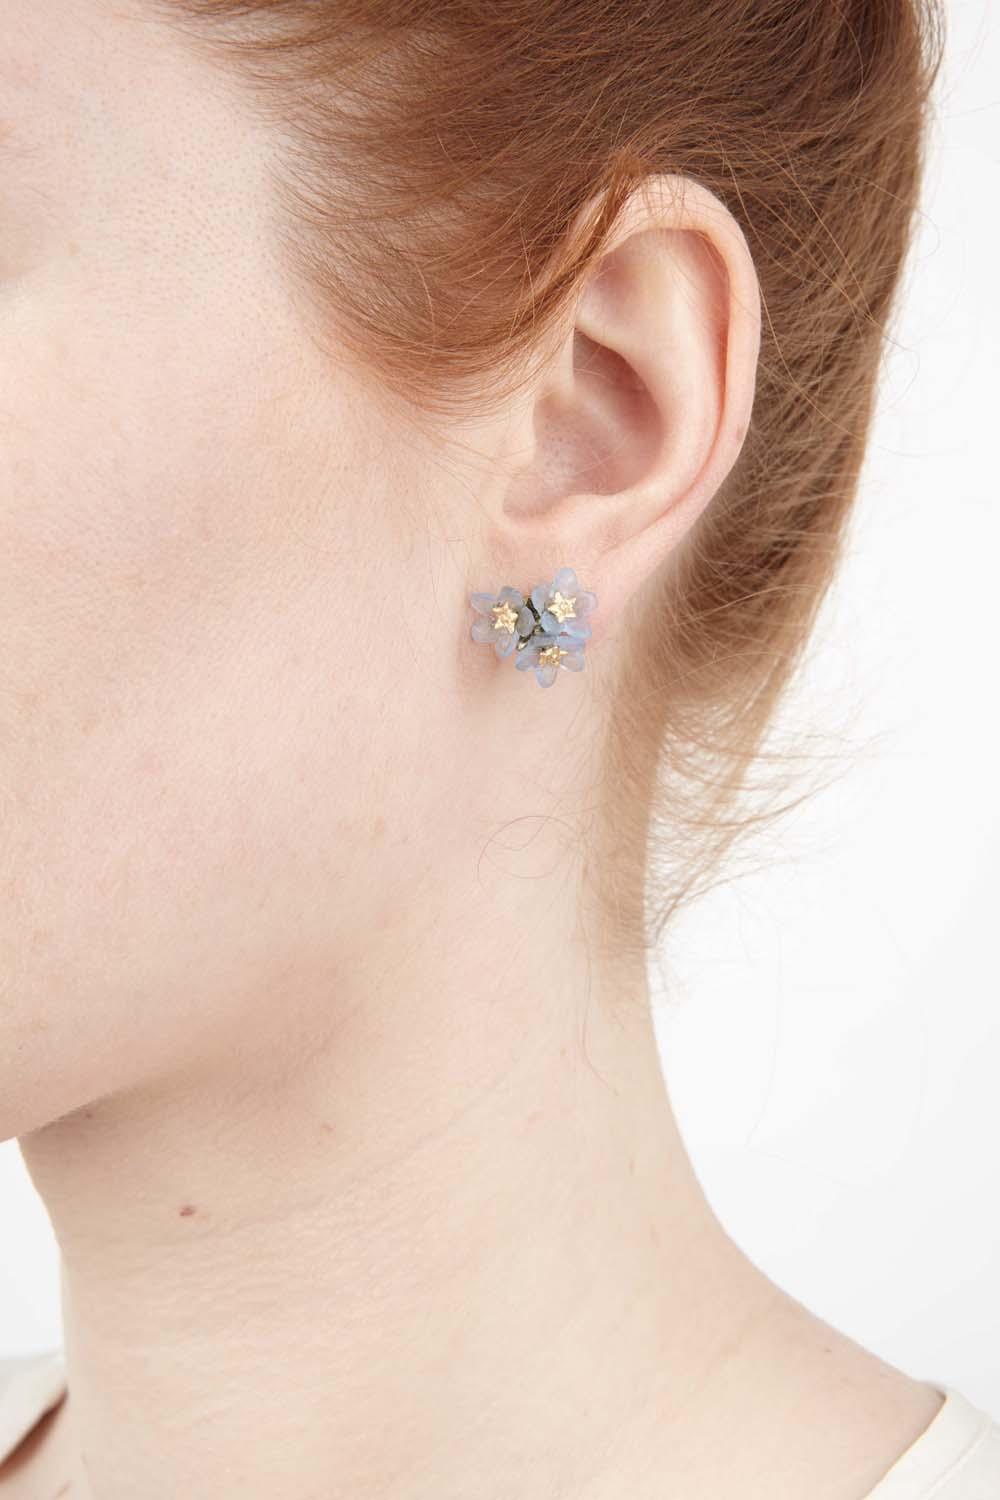 Forget Me Not Earrings - Triple Flower Post - Michael Michaud Jewellery